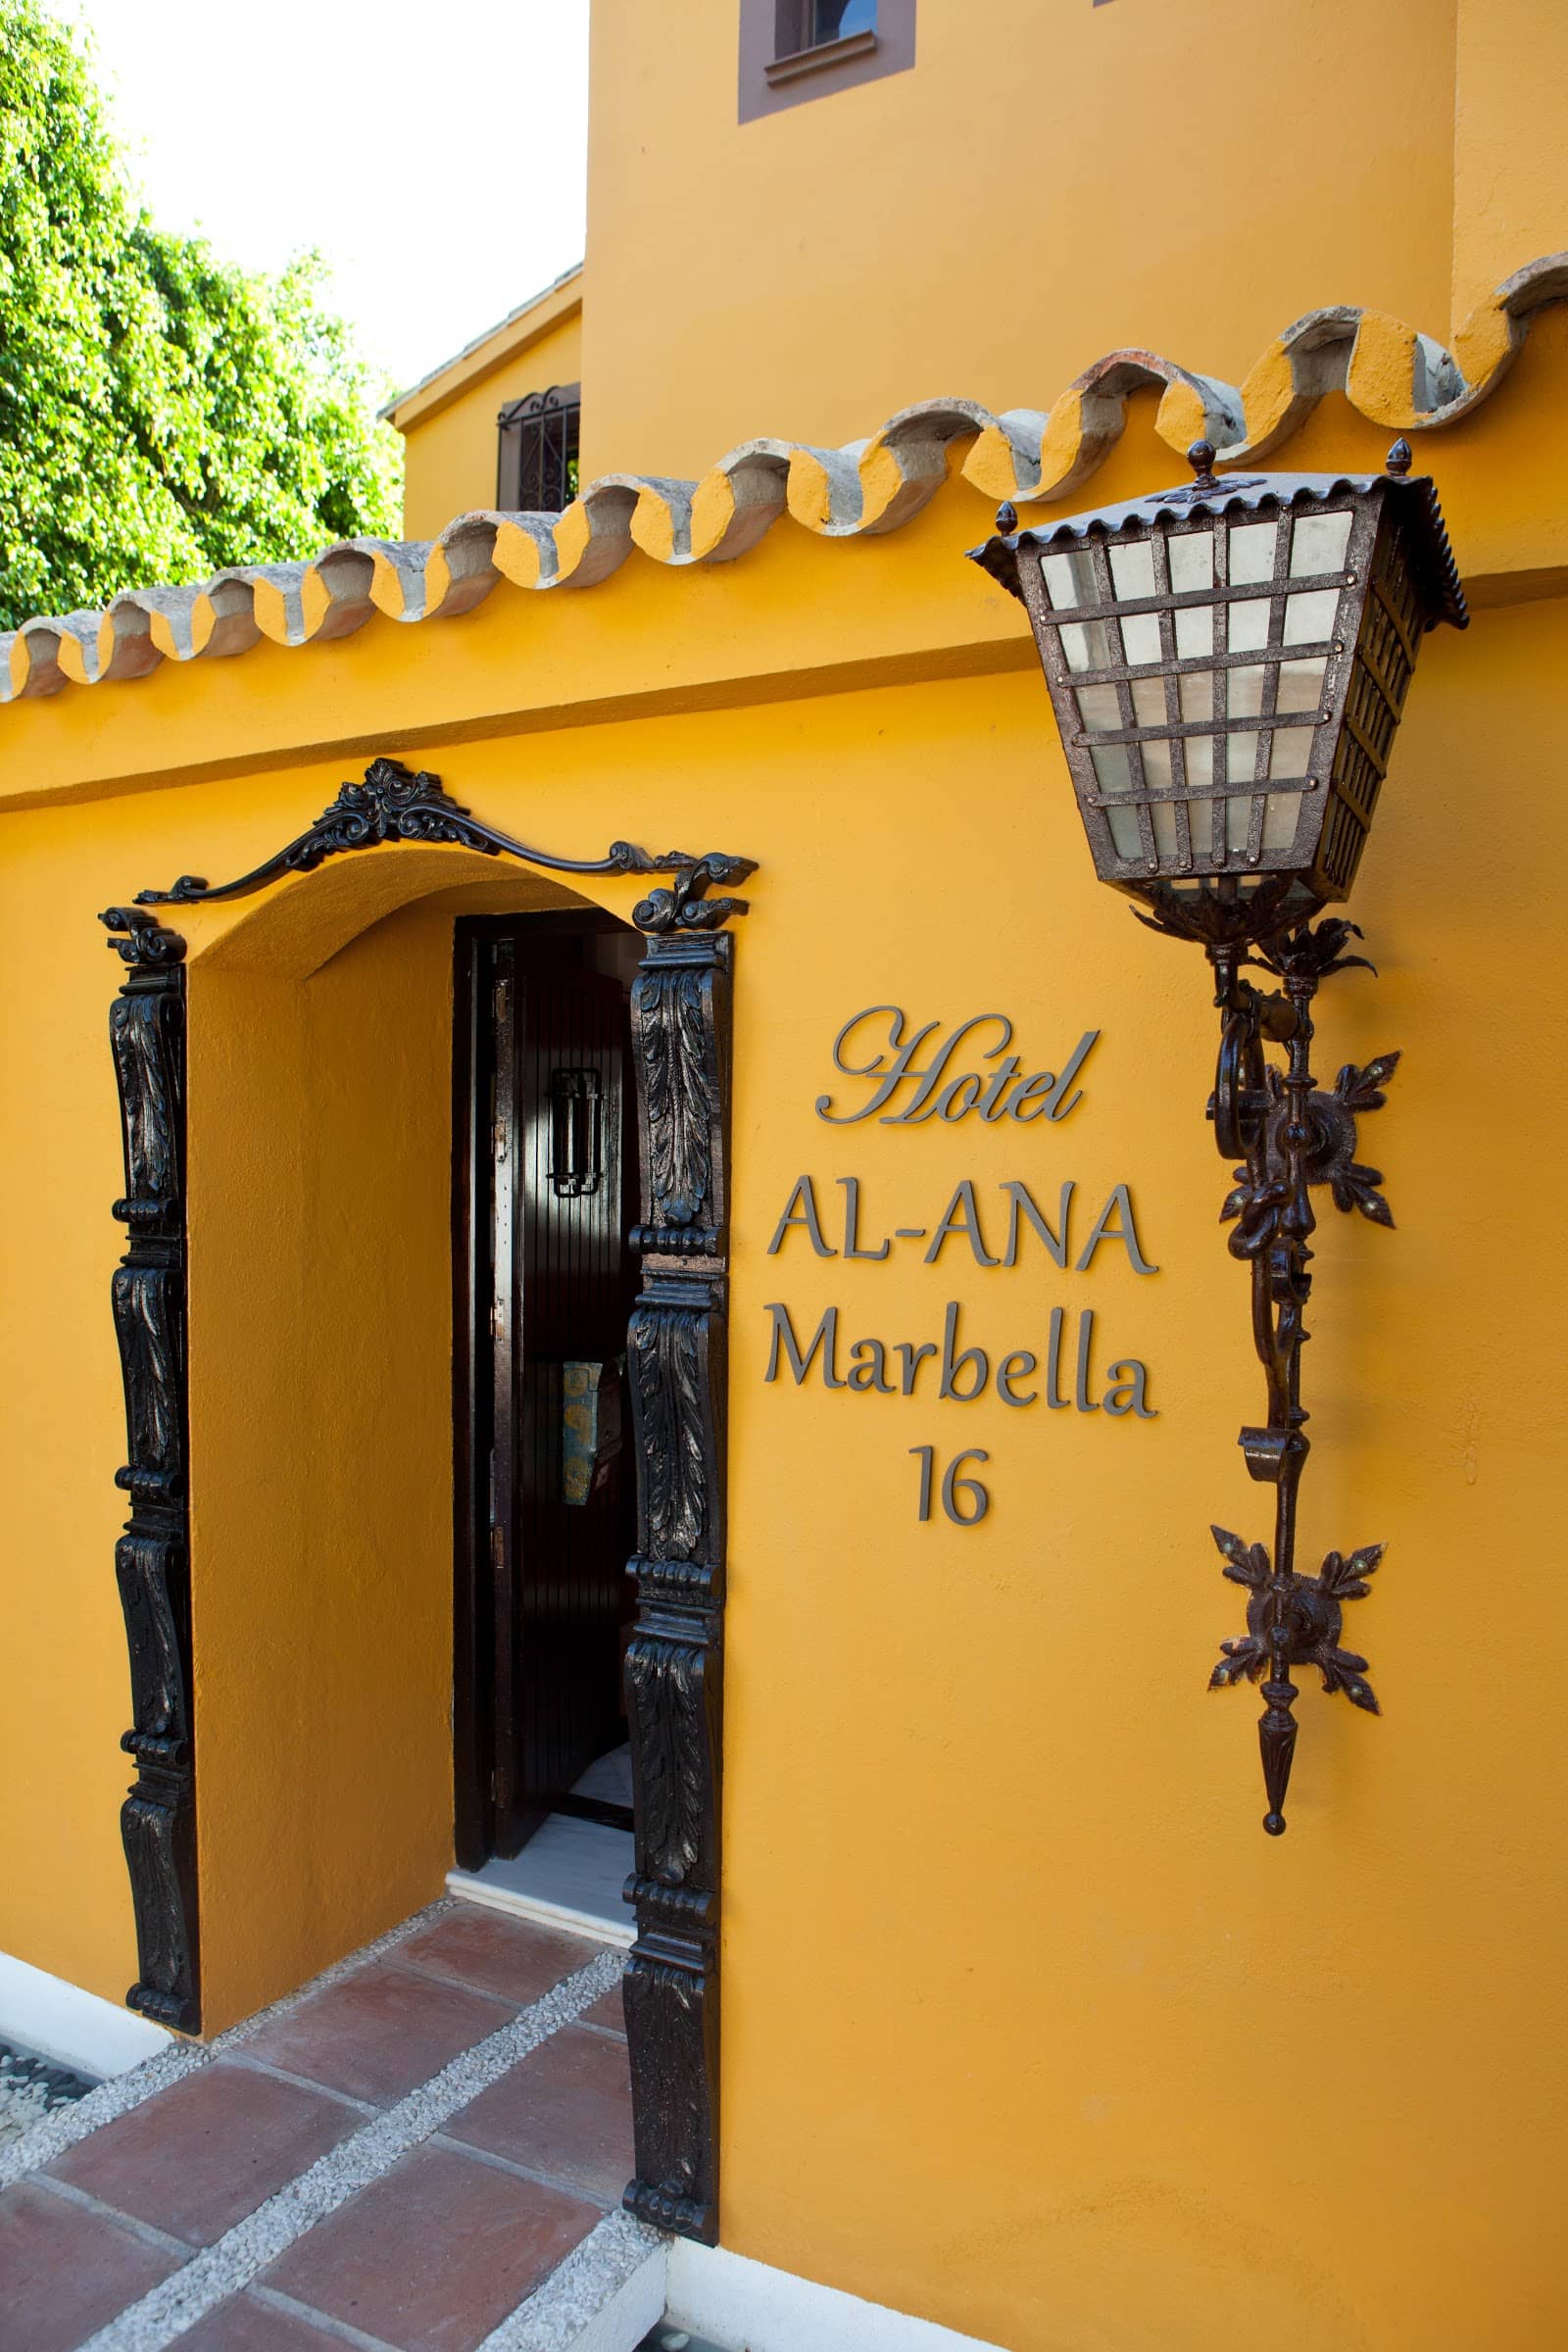 Hotel AL-ANA Marbella\x27s main entrance